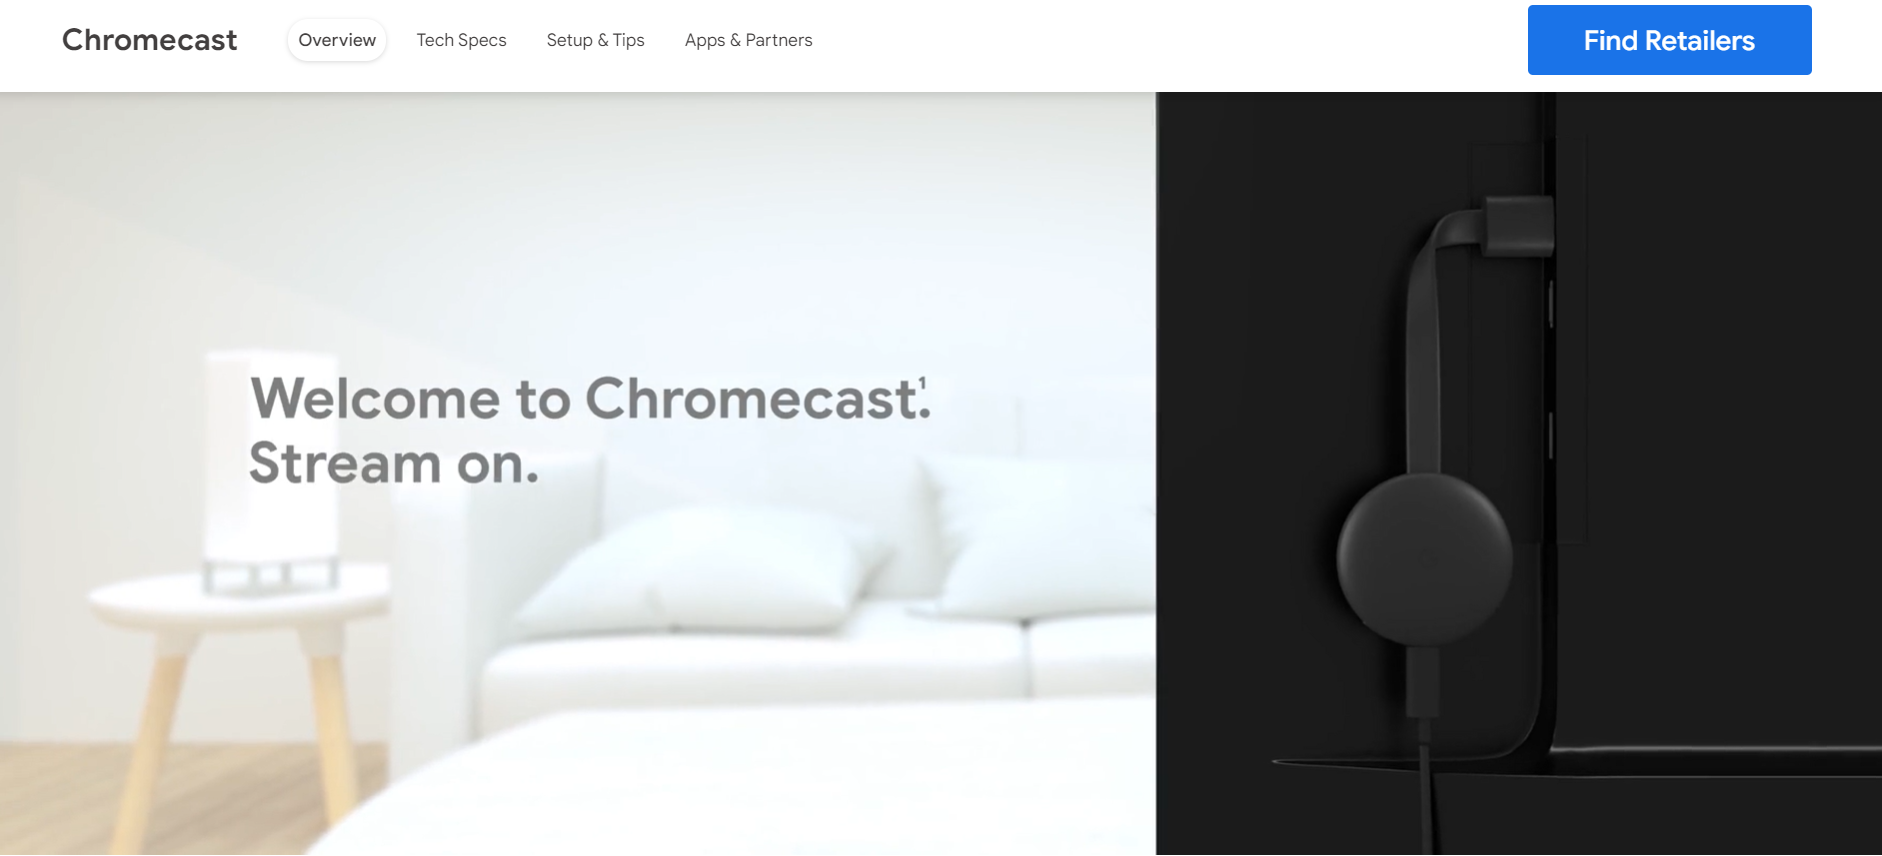 Google ChromeCast : How To Use ChromeCast Without WiFi 